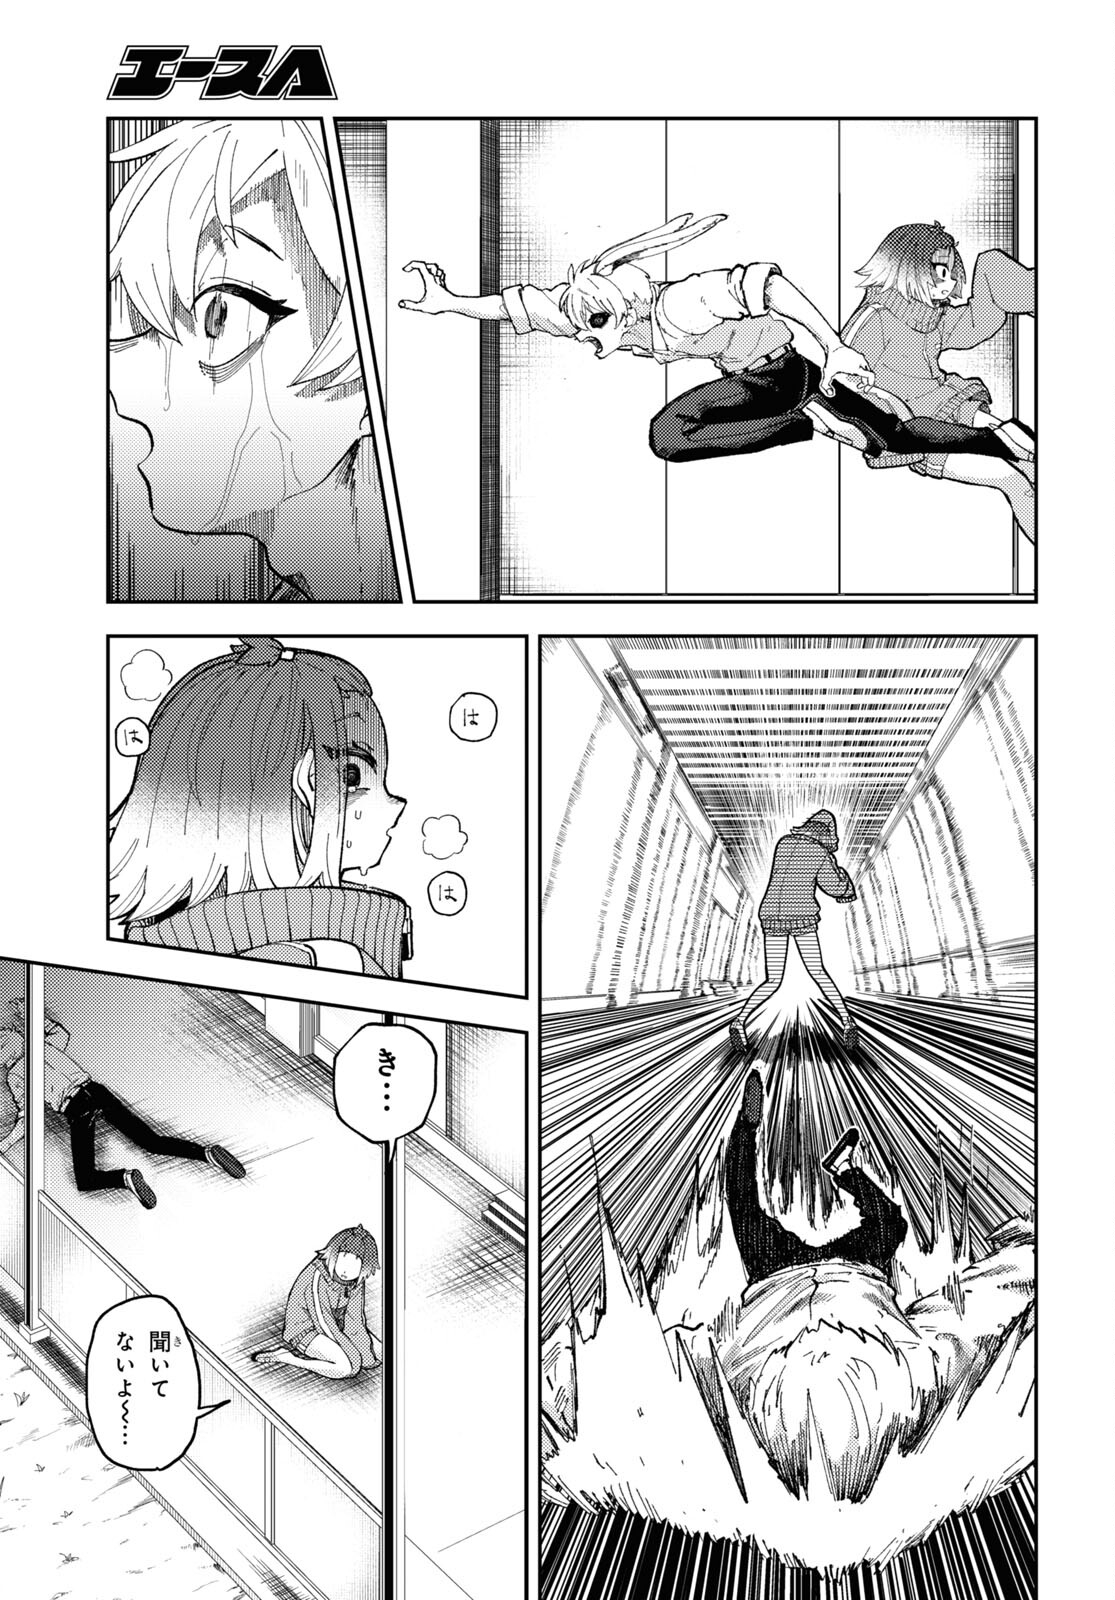 Garuru Girl - Chapter 3 - Page 31